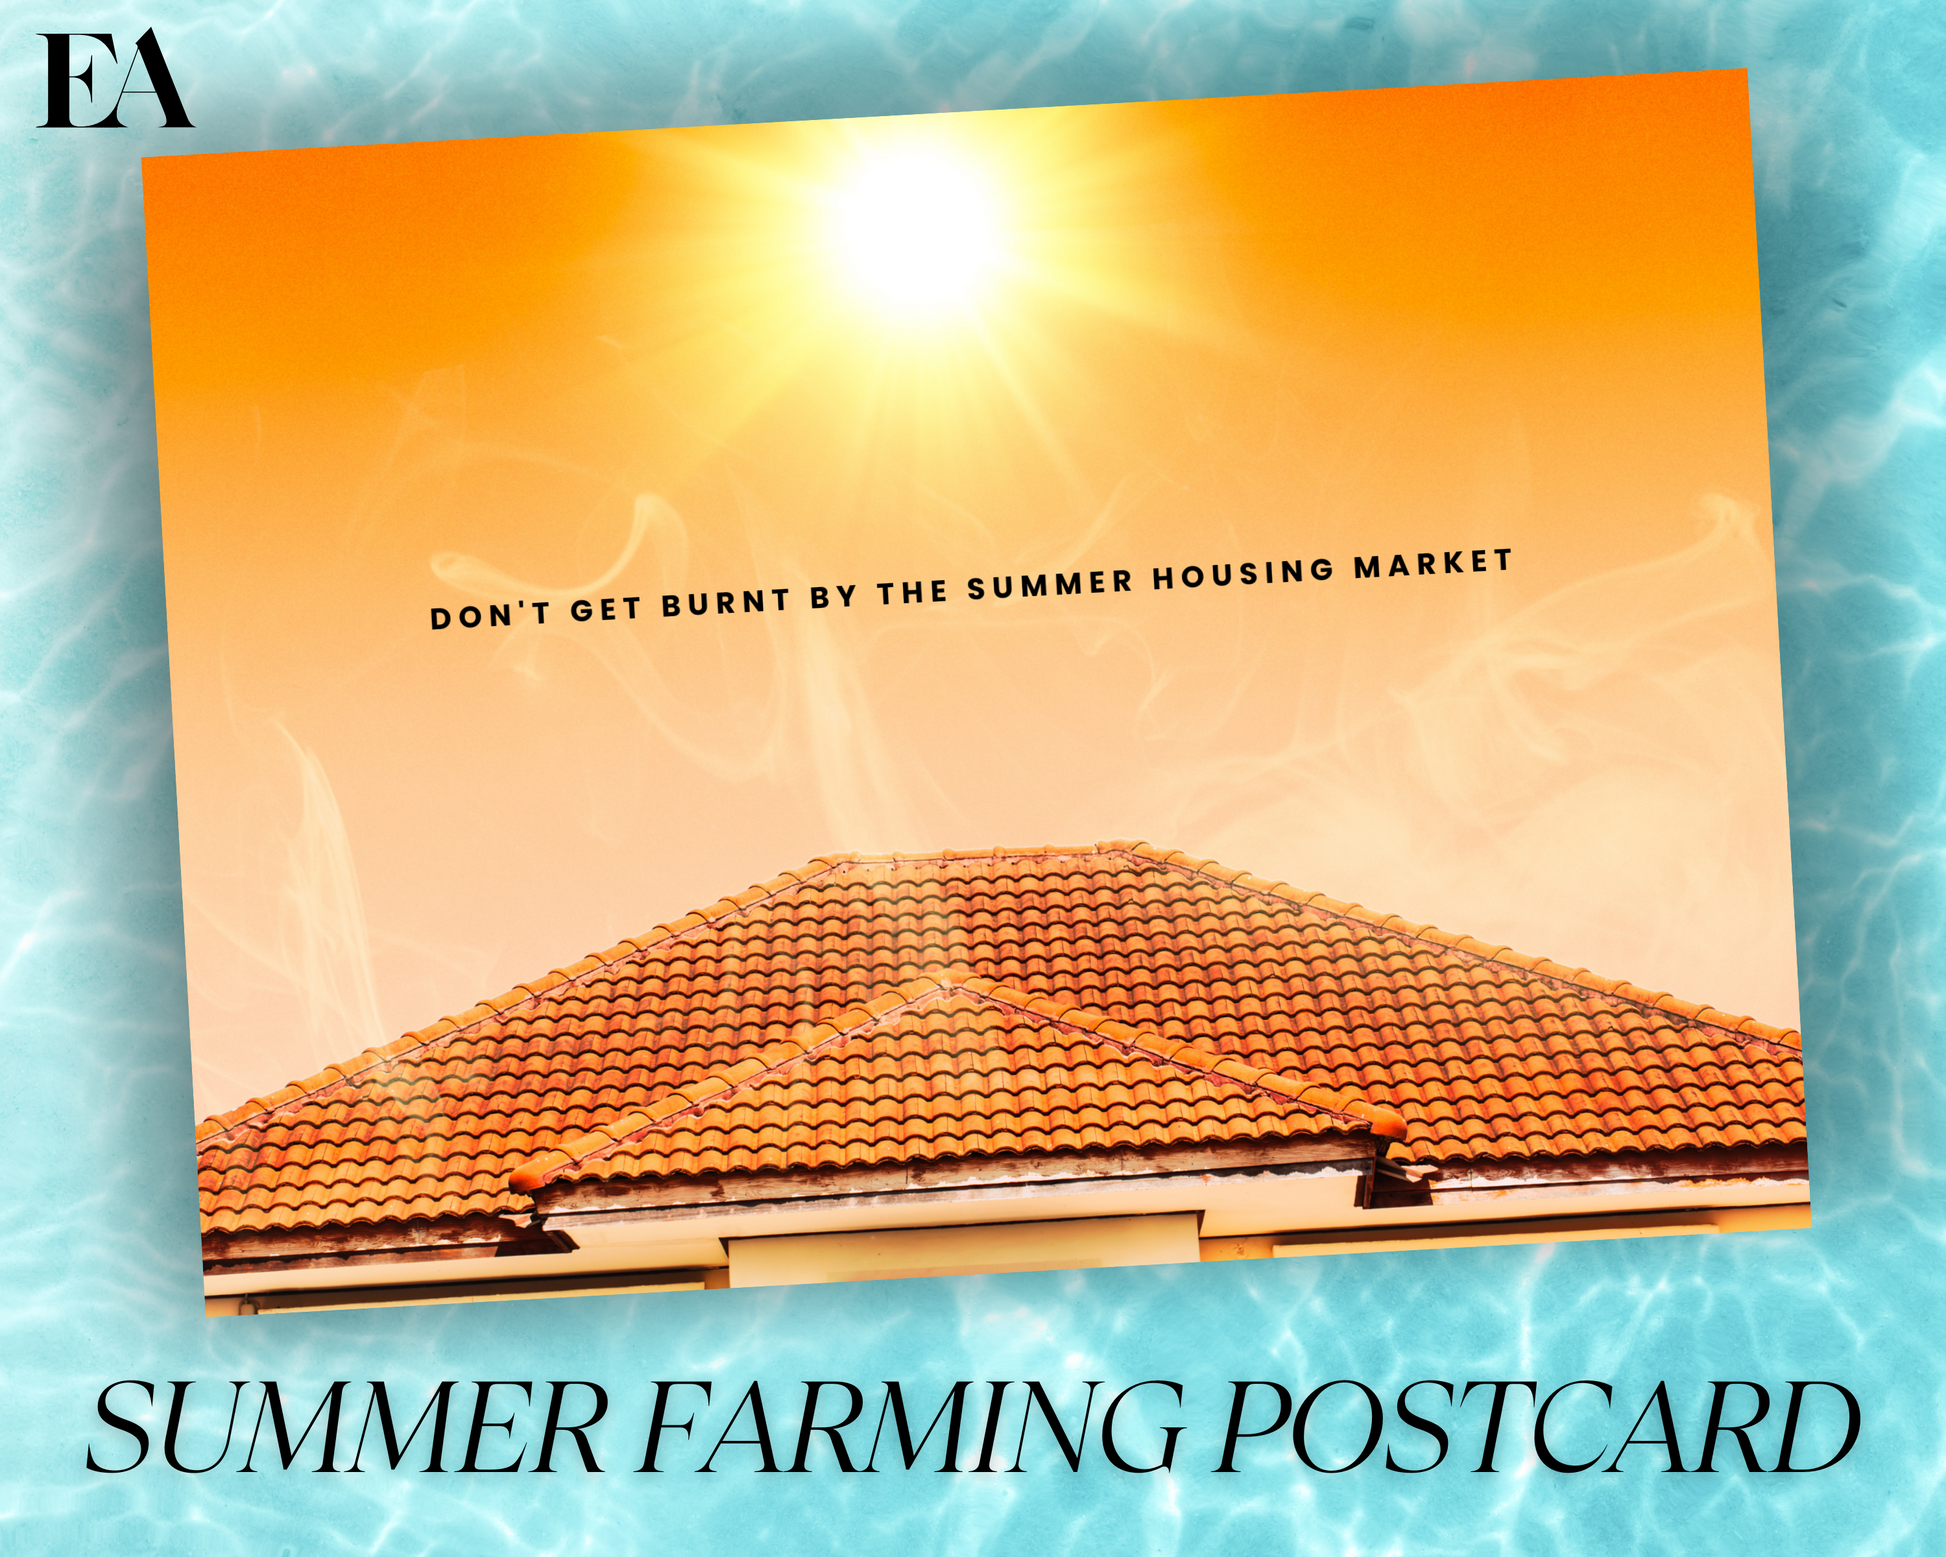 Real Estate CMA Postcard Home Value Mailer Real Estate CMA Farming Postcard Real Estate Summer Postcard Farming Postcard Summer CMA Postcard